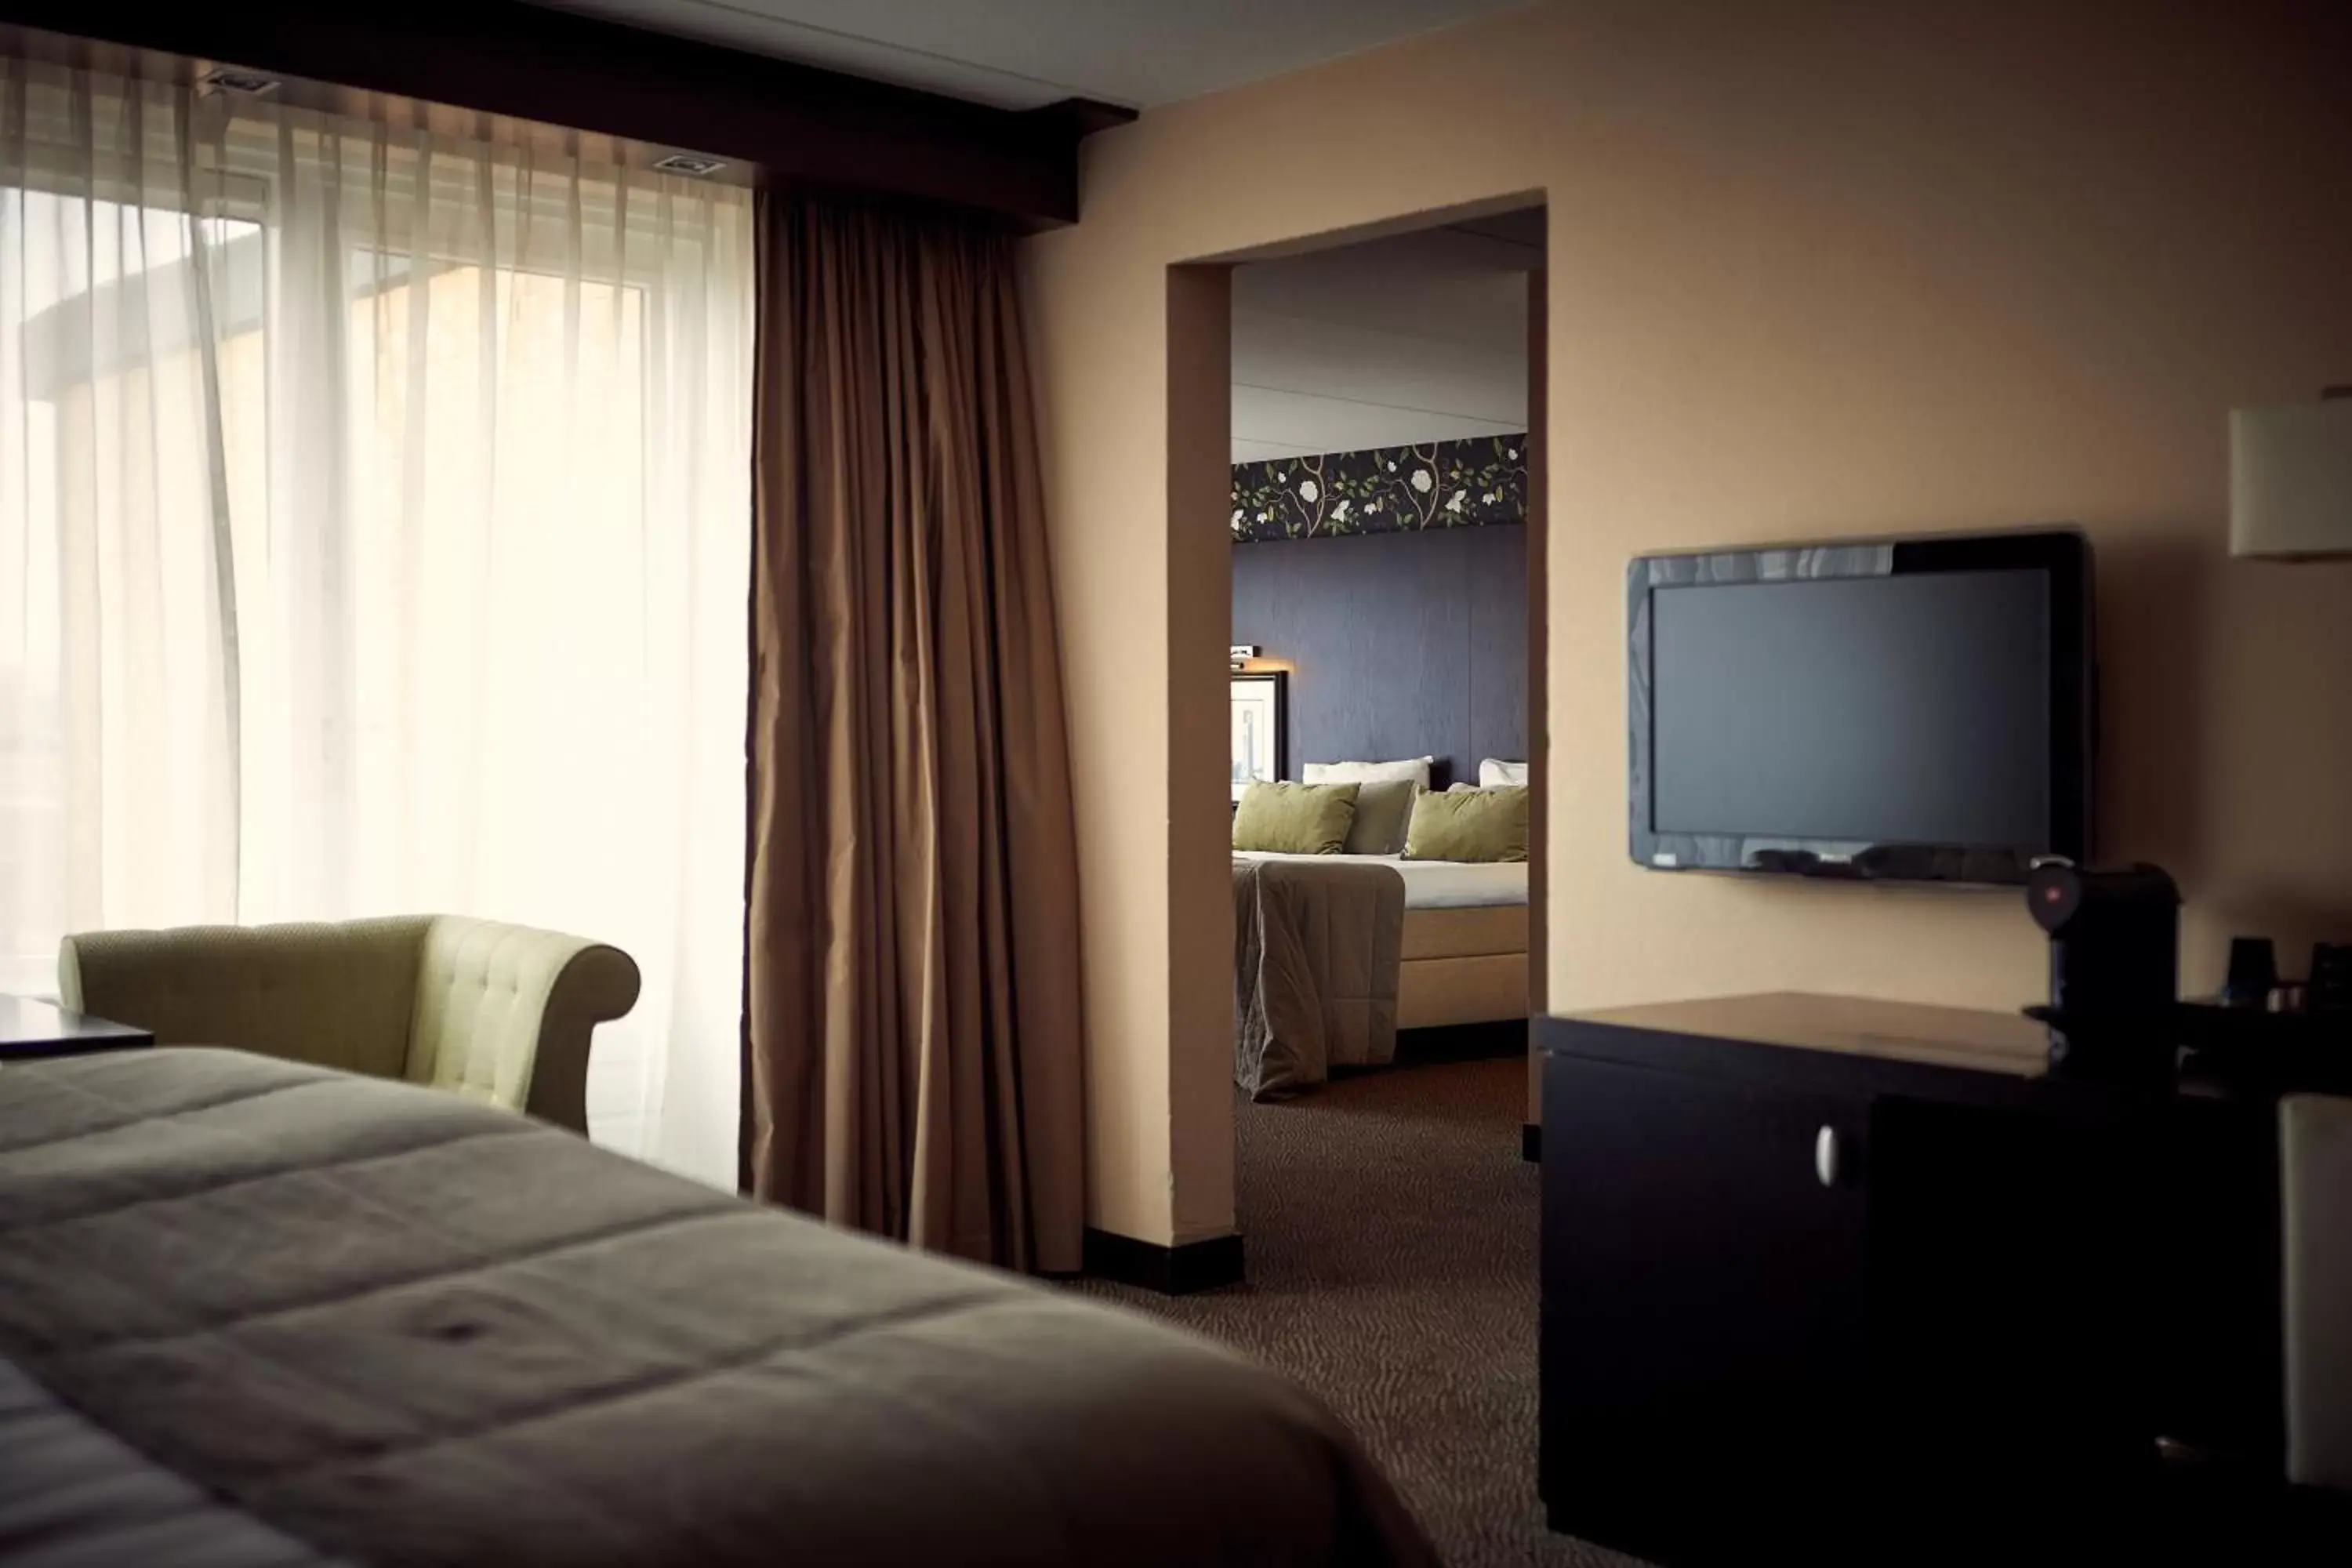 Bedroom, TV/Entertainment Center in Van der Valk Hotel Emmeloord